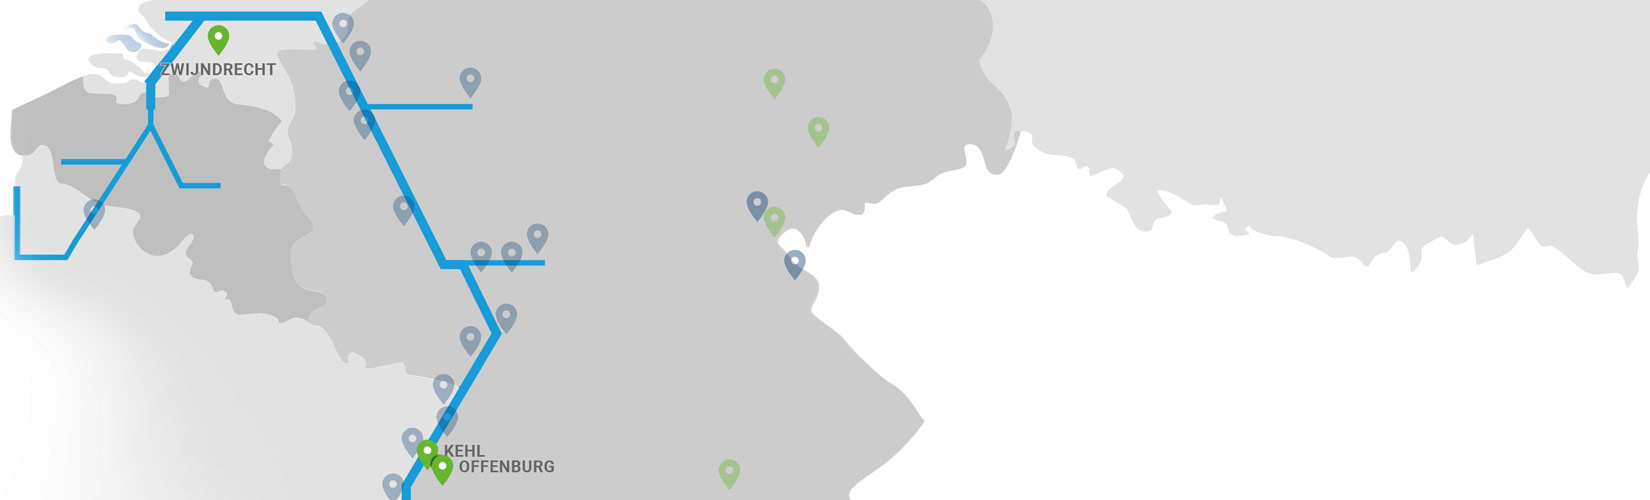 Contargo Network Service Landkarte